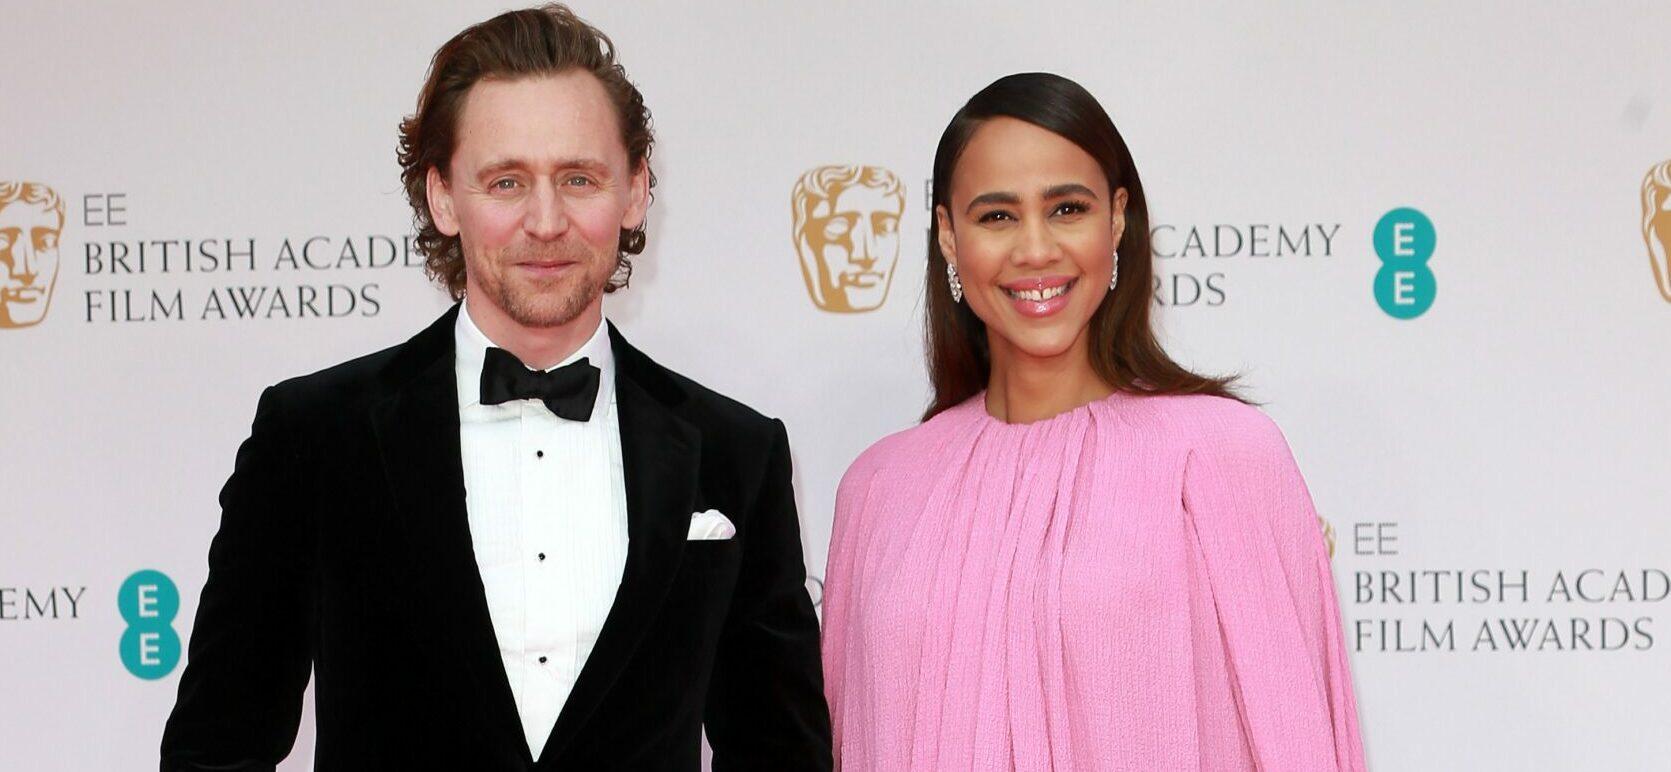 Tom Hiddleston Confirms Engagement To Zawe Ashton: ‘I’m Very Happy’